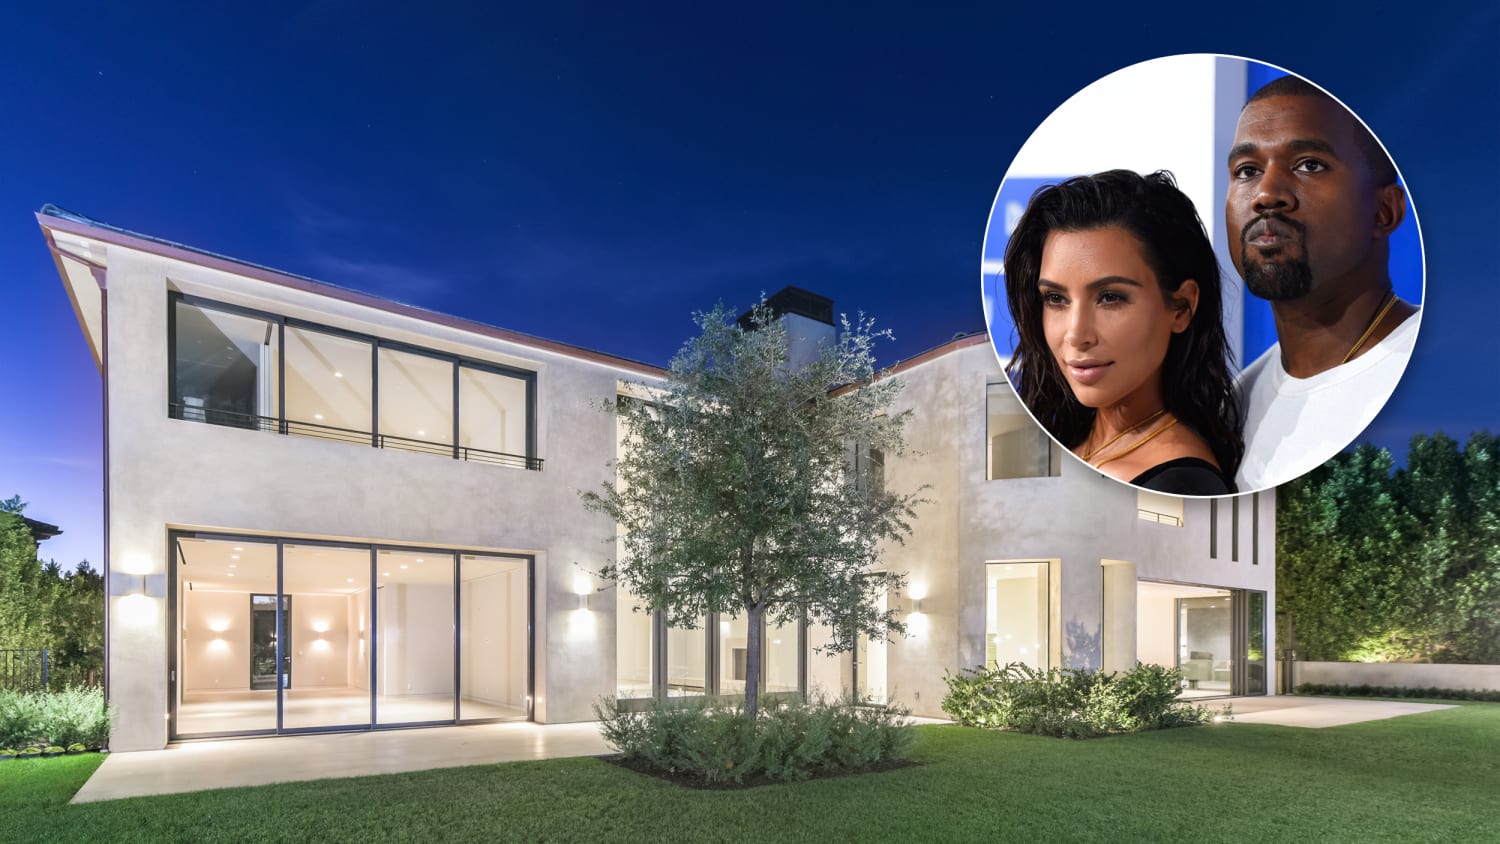 Kim Kardashian West and Kanye West's Bel Air estate is for sale.